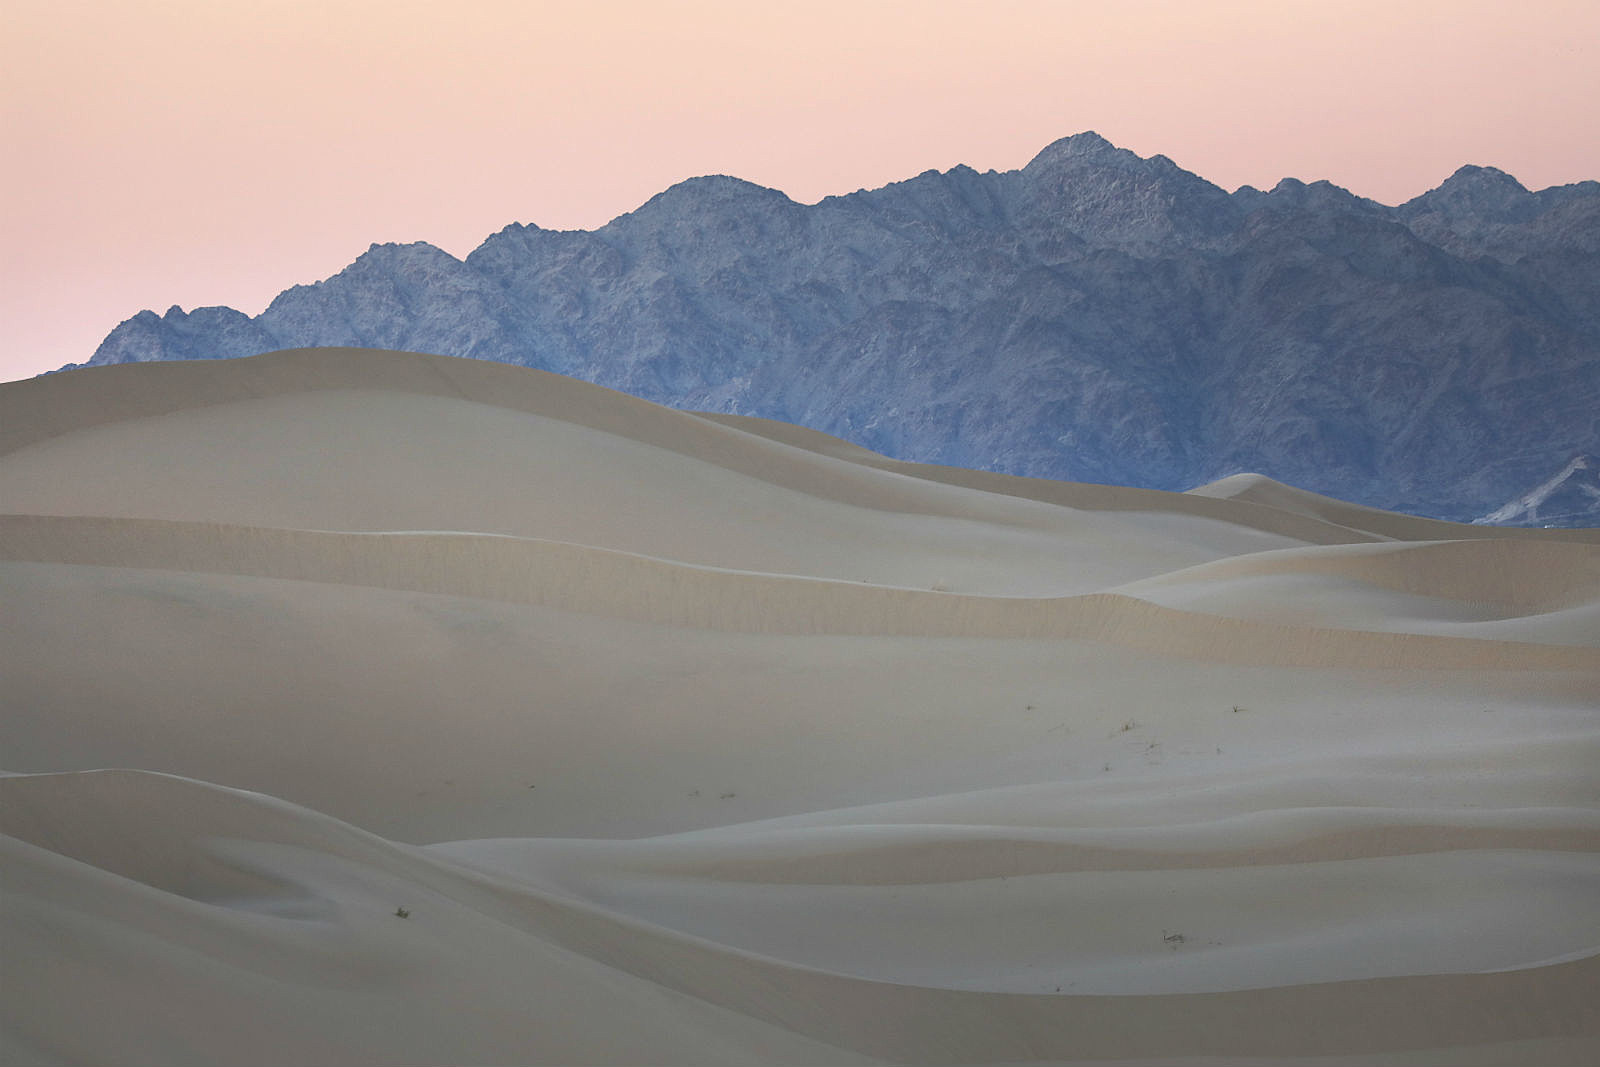 what causes singing sand dunes